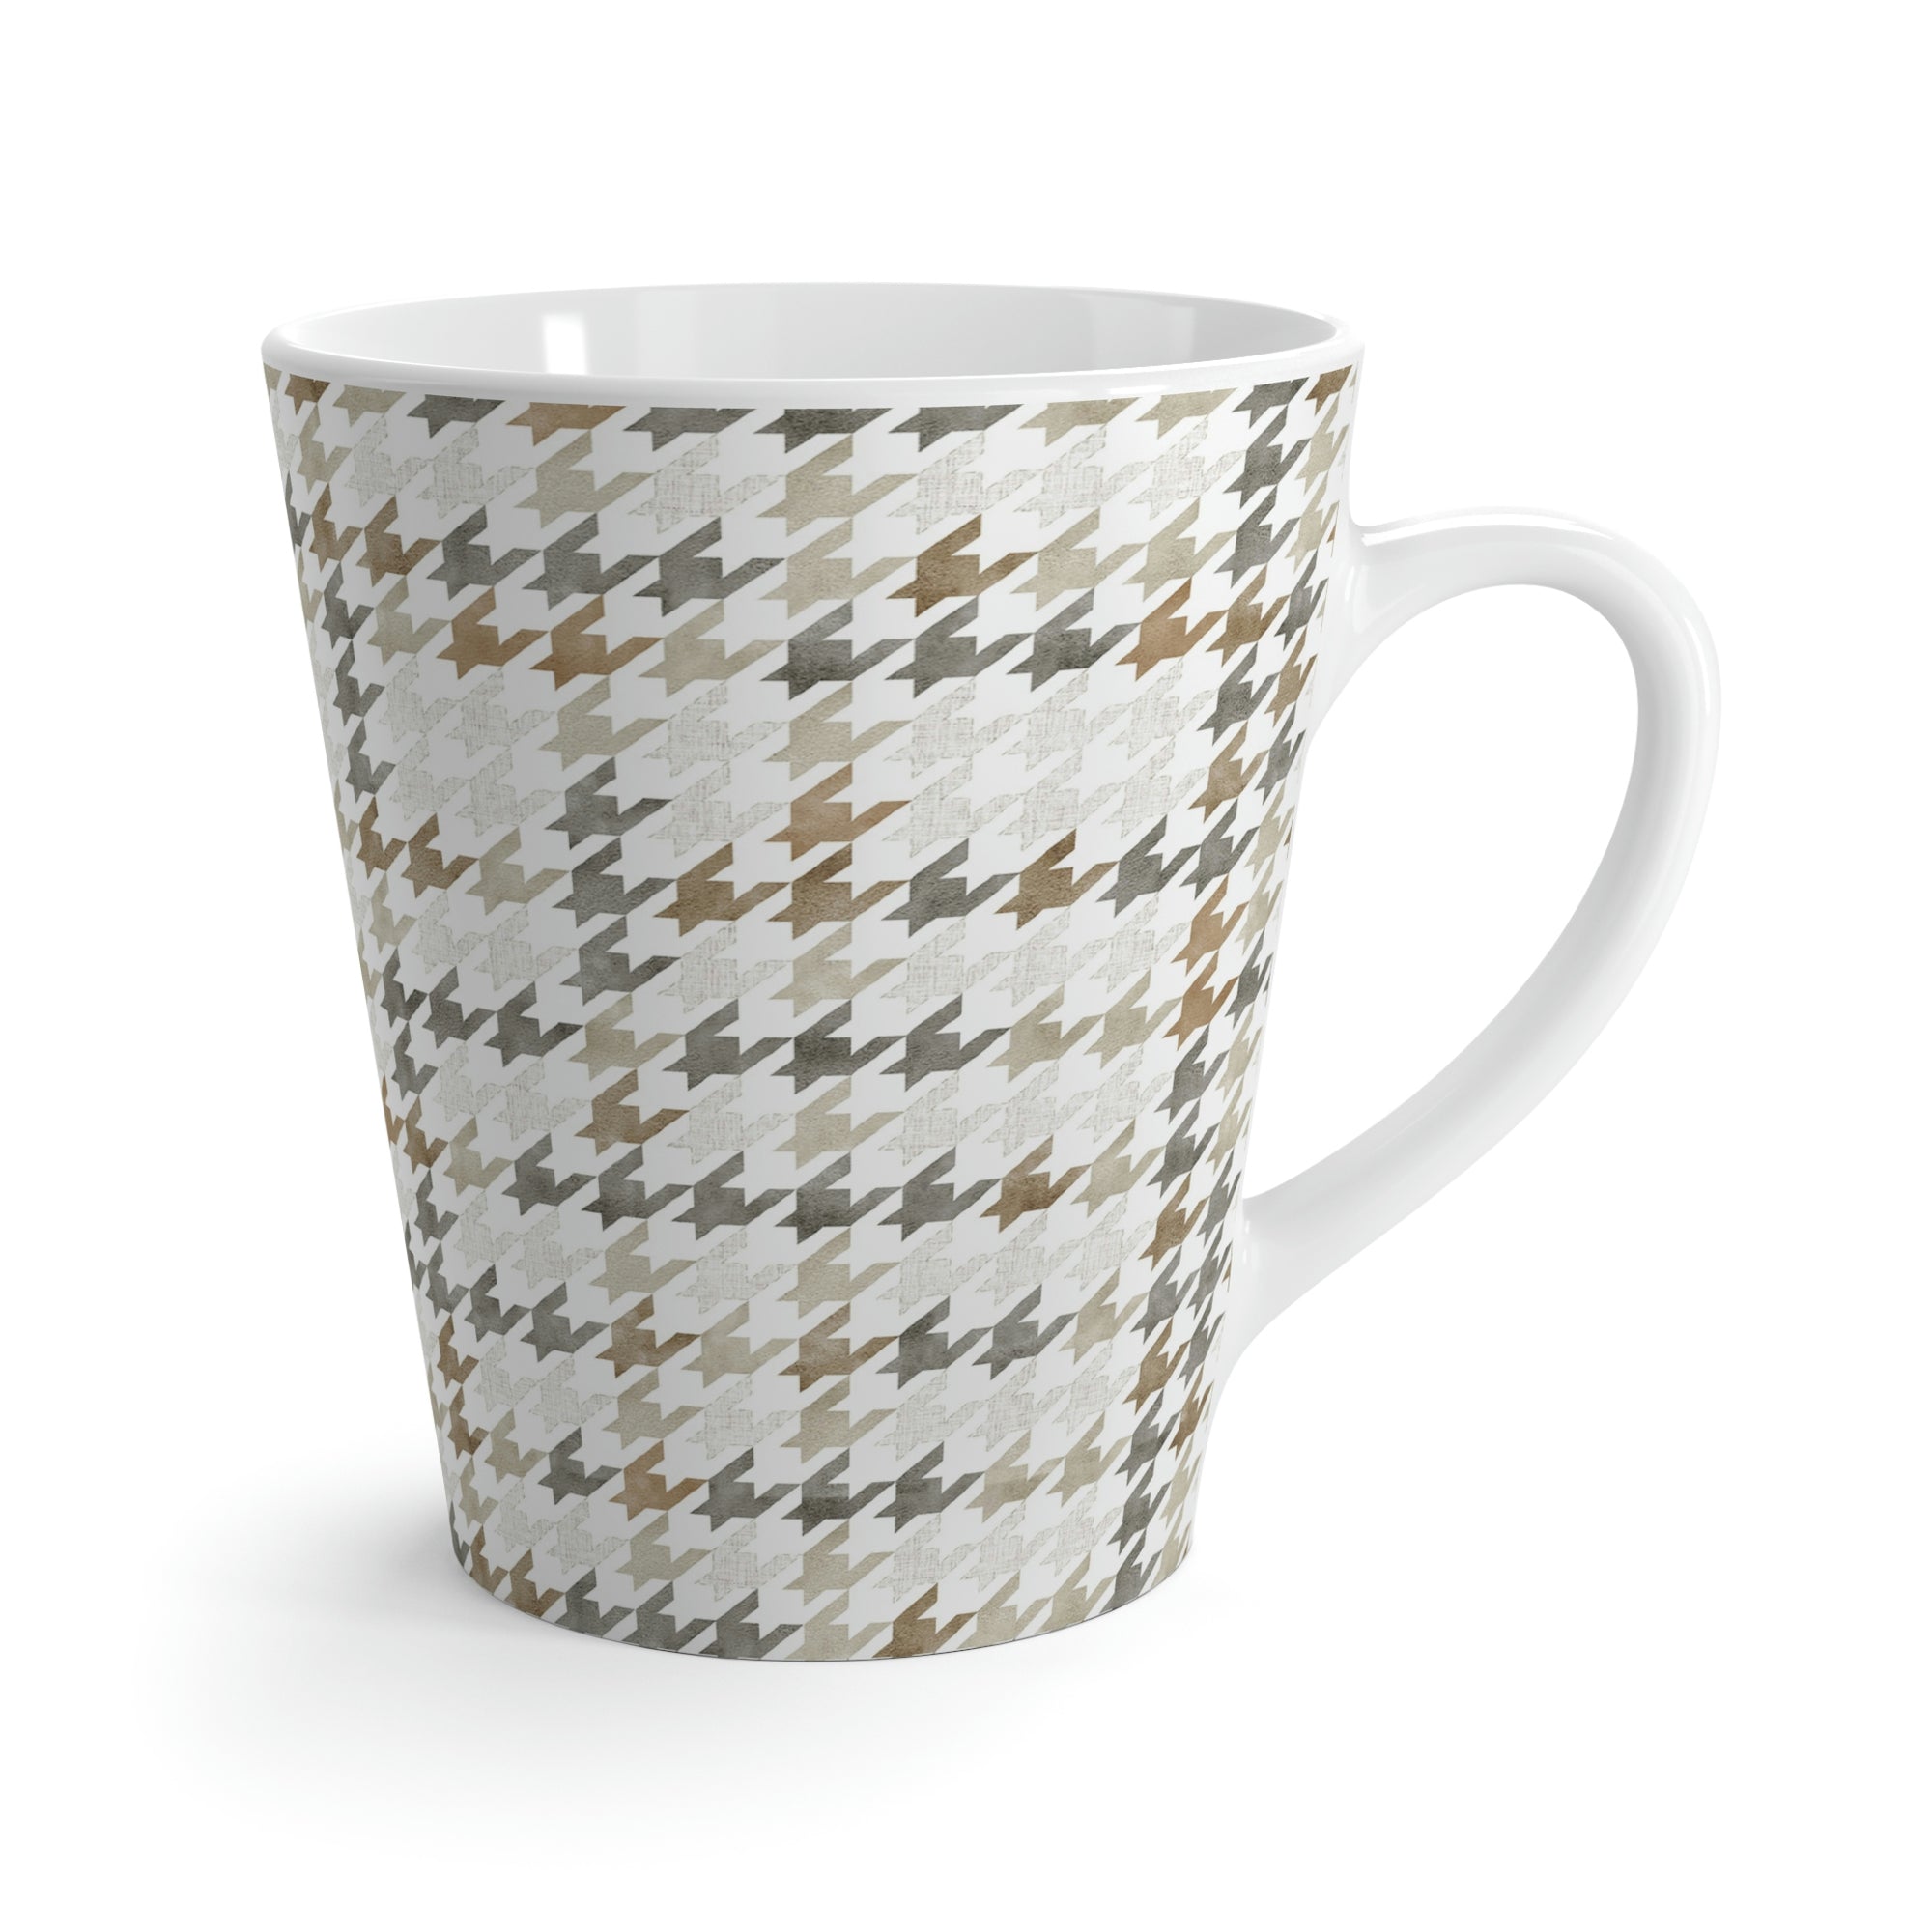 Plaid Houndstooth Latte Mug in Brown